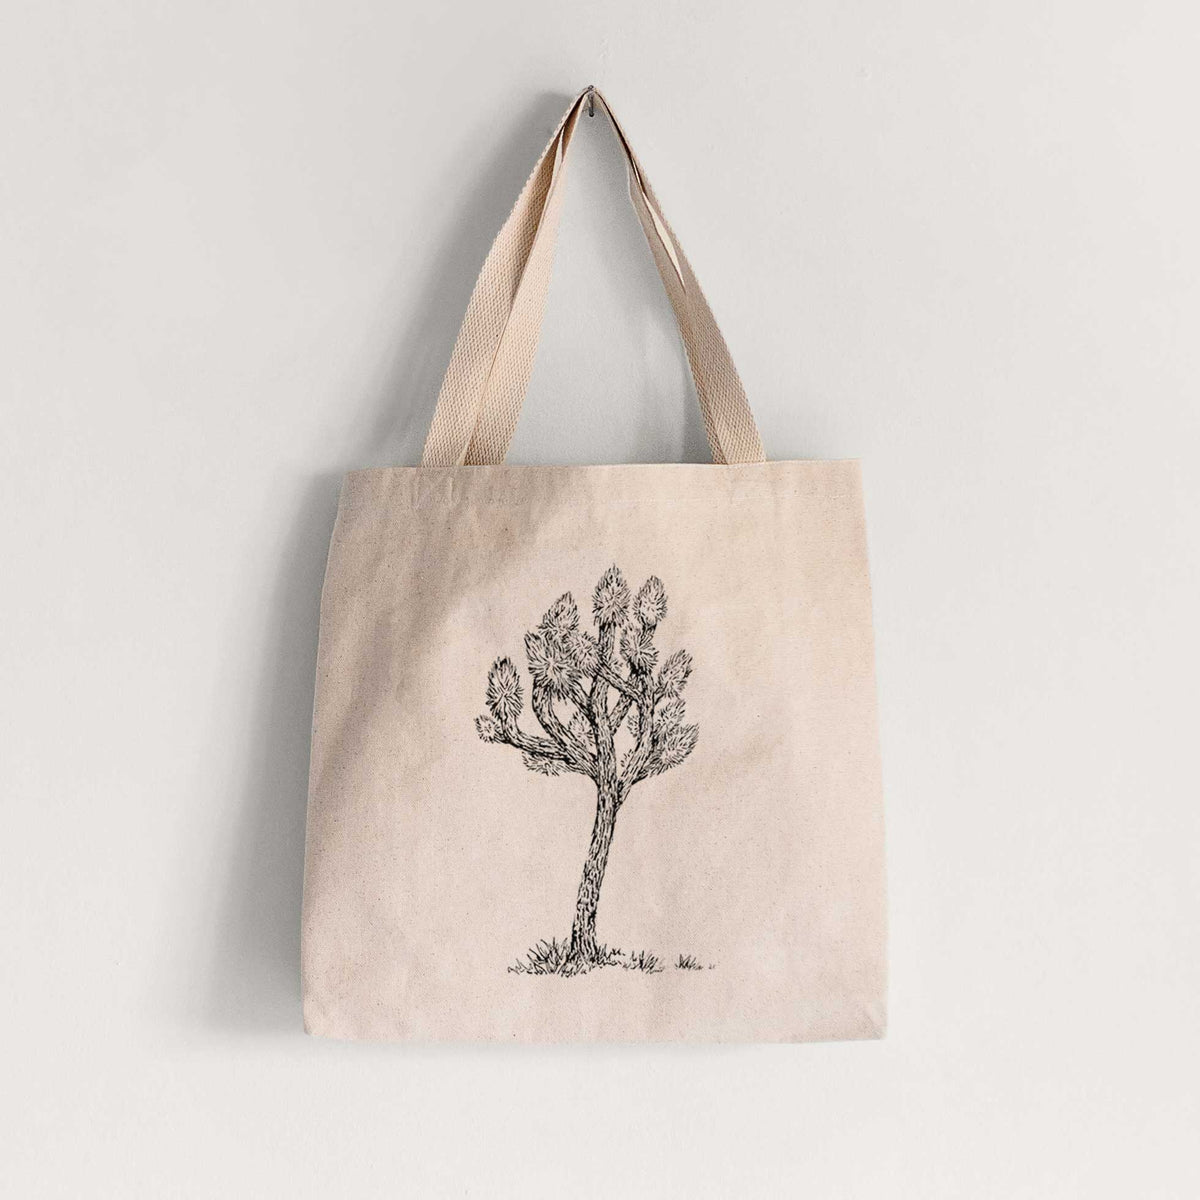 Yucca brevifolia - Joshua Tree - Tote Bag